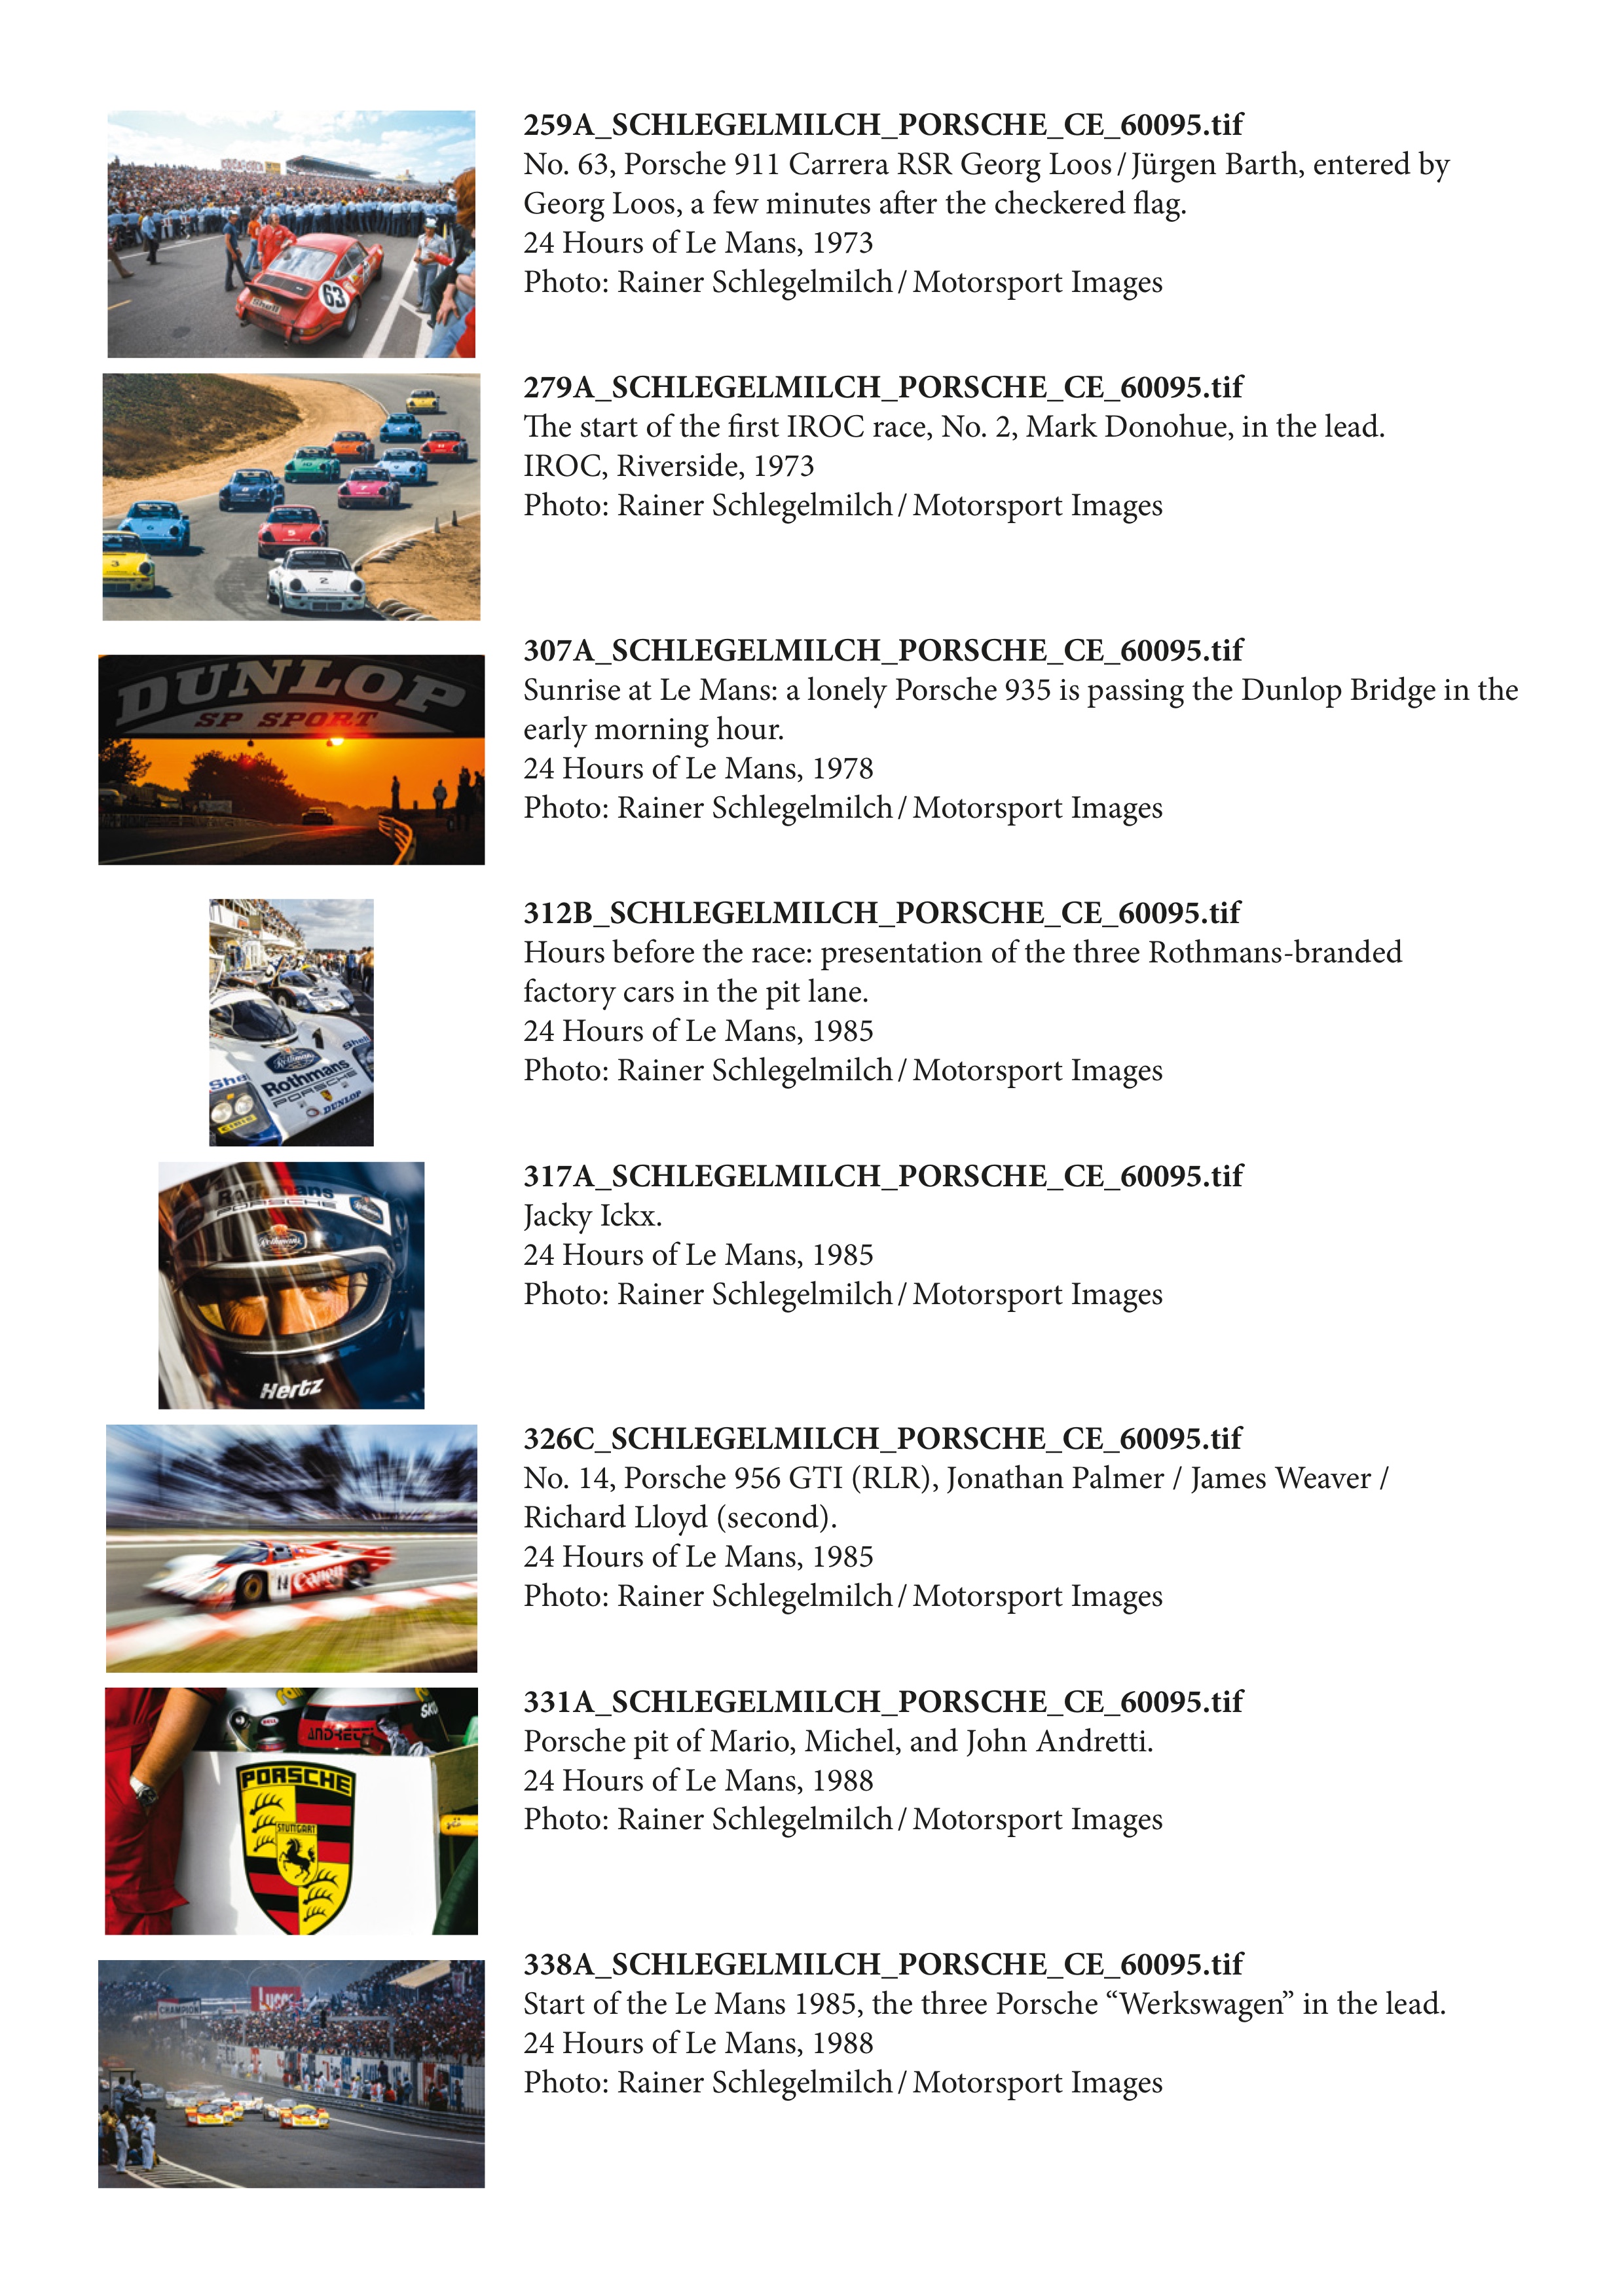 IMG_00002 SemanalClásico - Revista online de coches clásicos, de colección y sport - Porsche